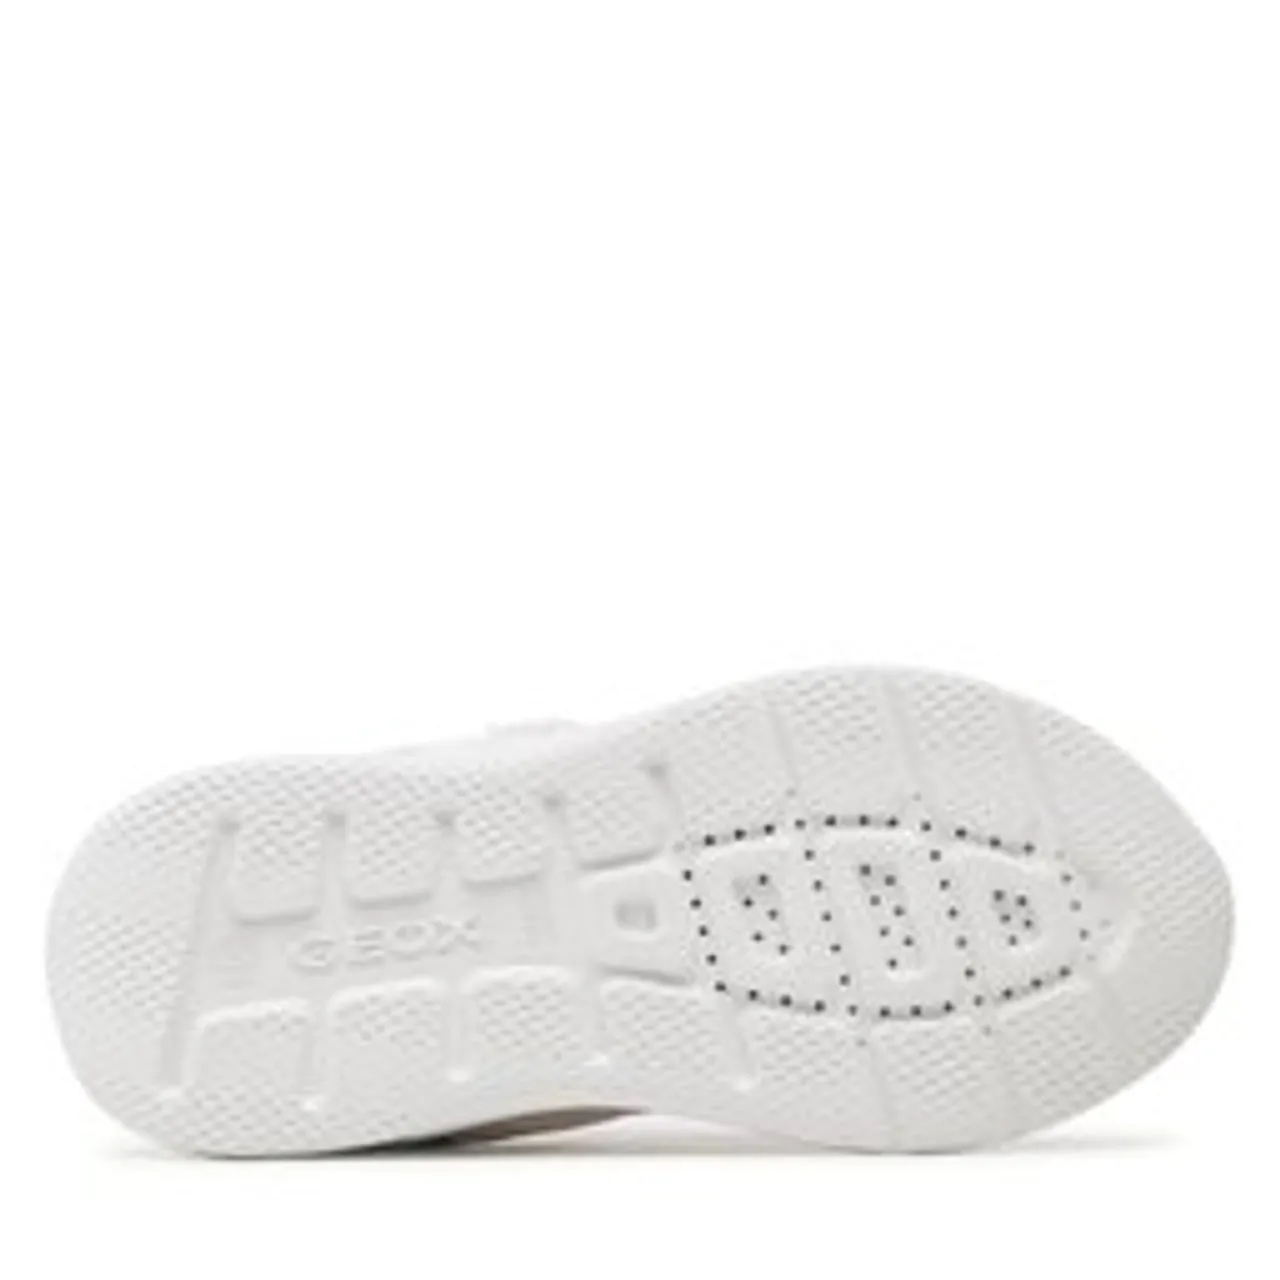 Sneakers Geox J Sprintye Girl J25FWC01454C0563 D White/Fuchsia